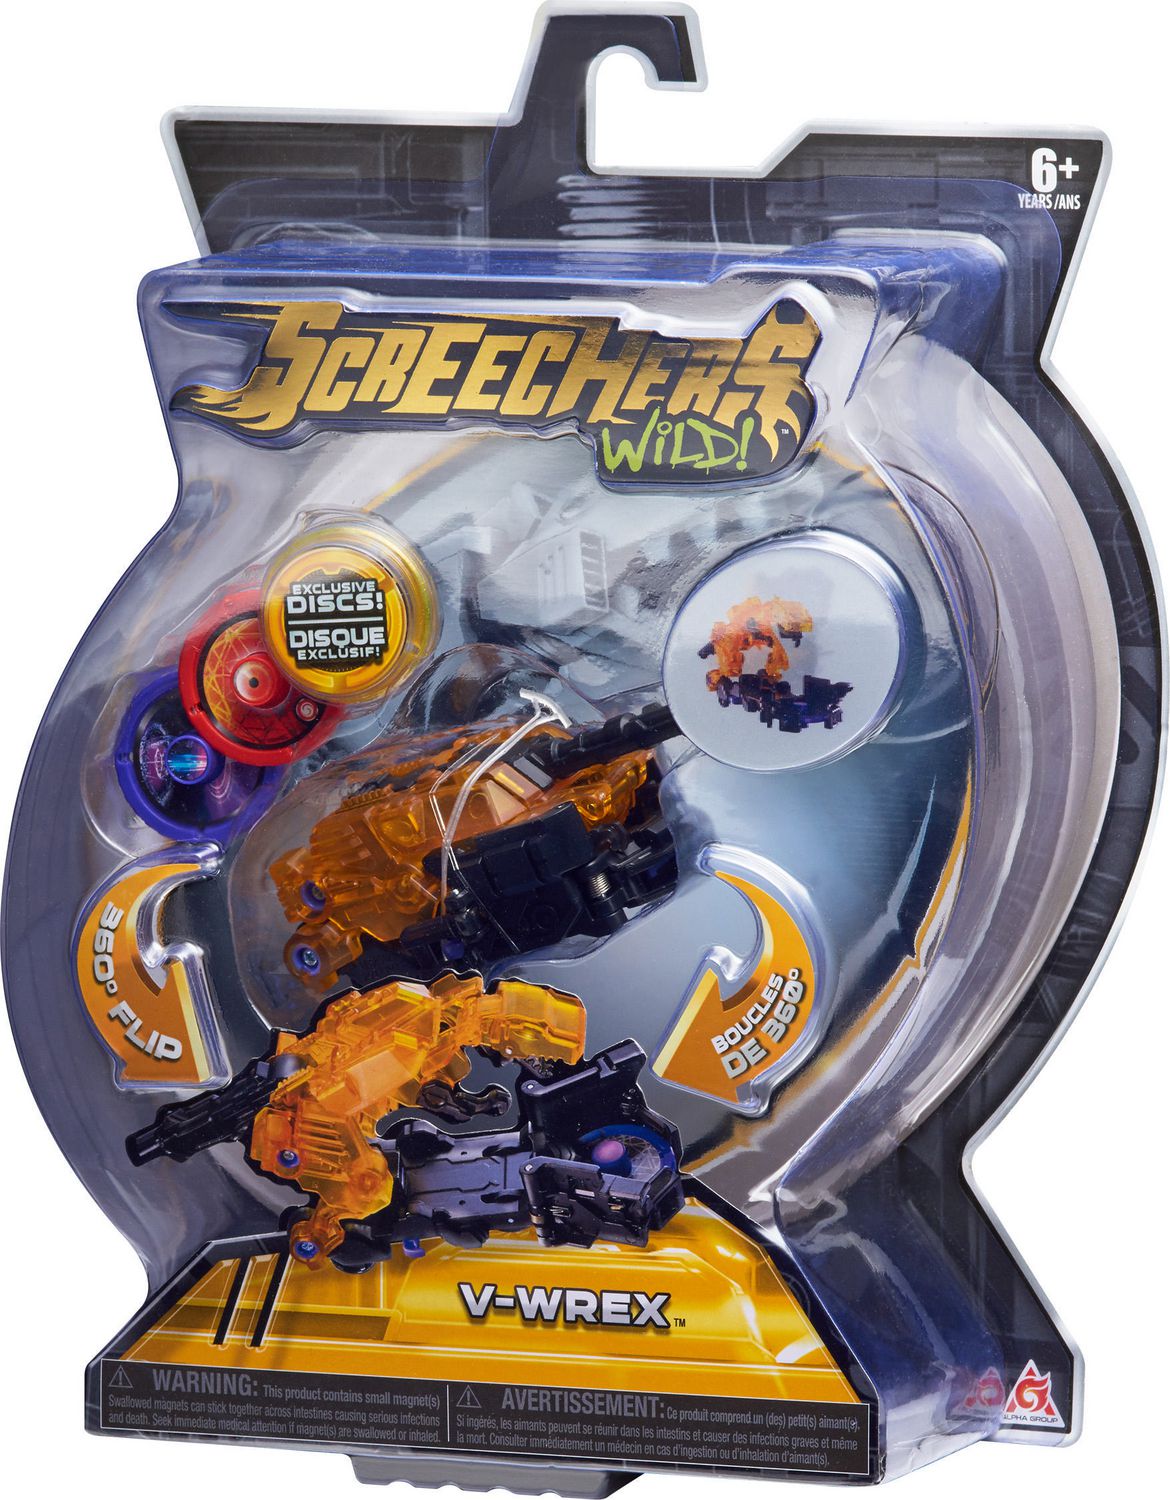 Screechers Wild V-Wrex Level 2 Kippen Morphing Spielzeug Auto Fahrzeug Spielset 